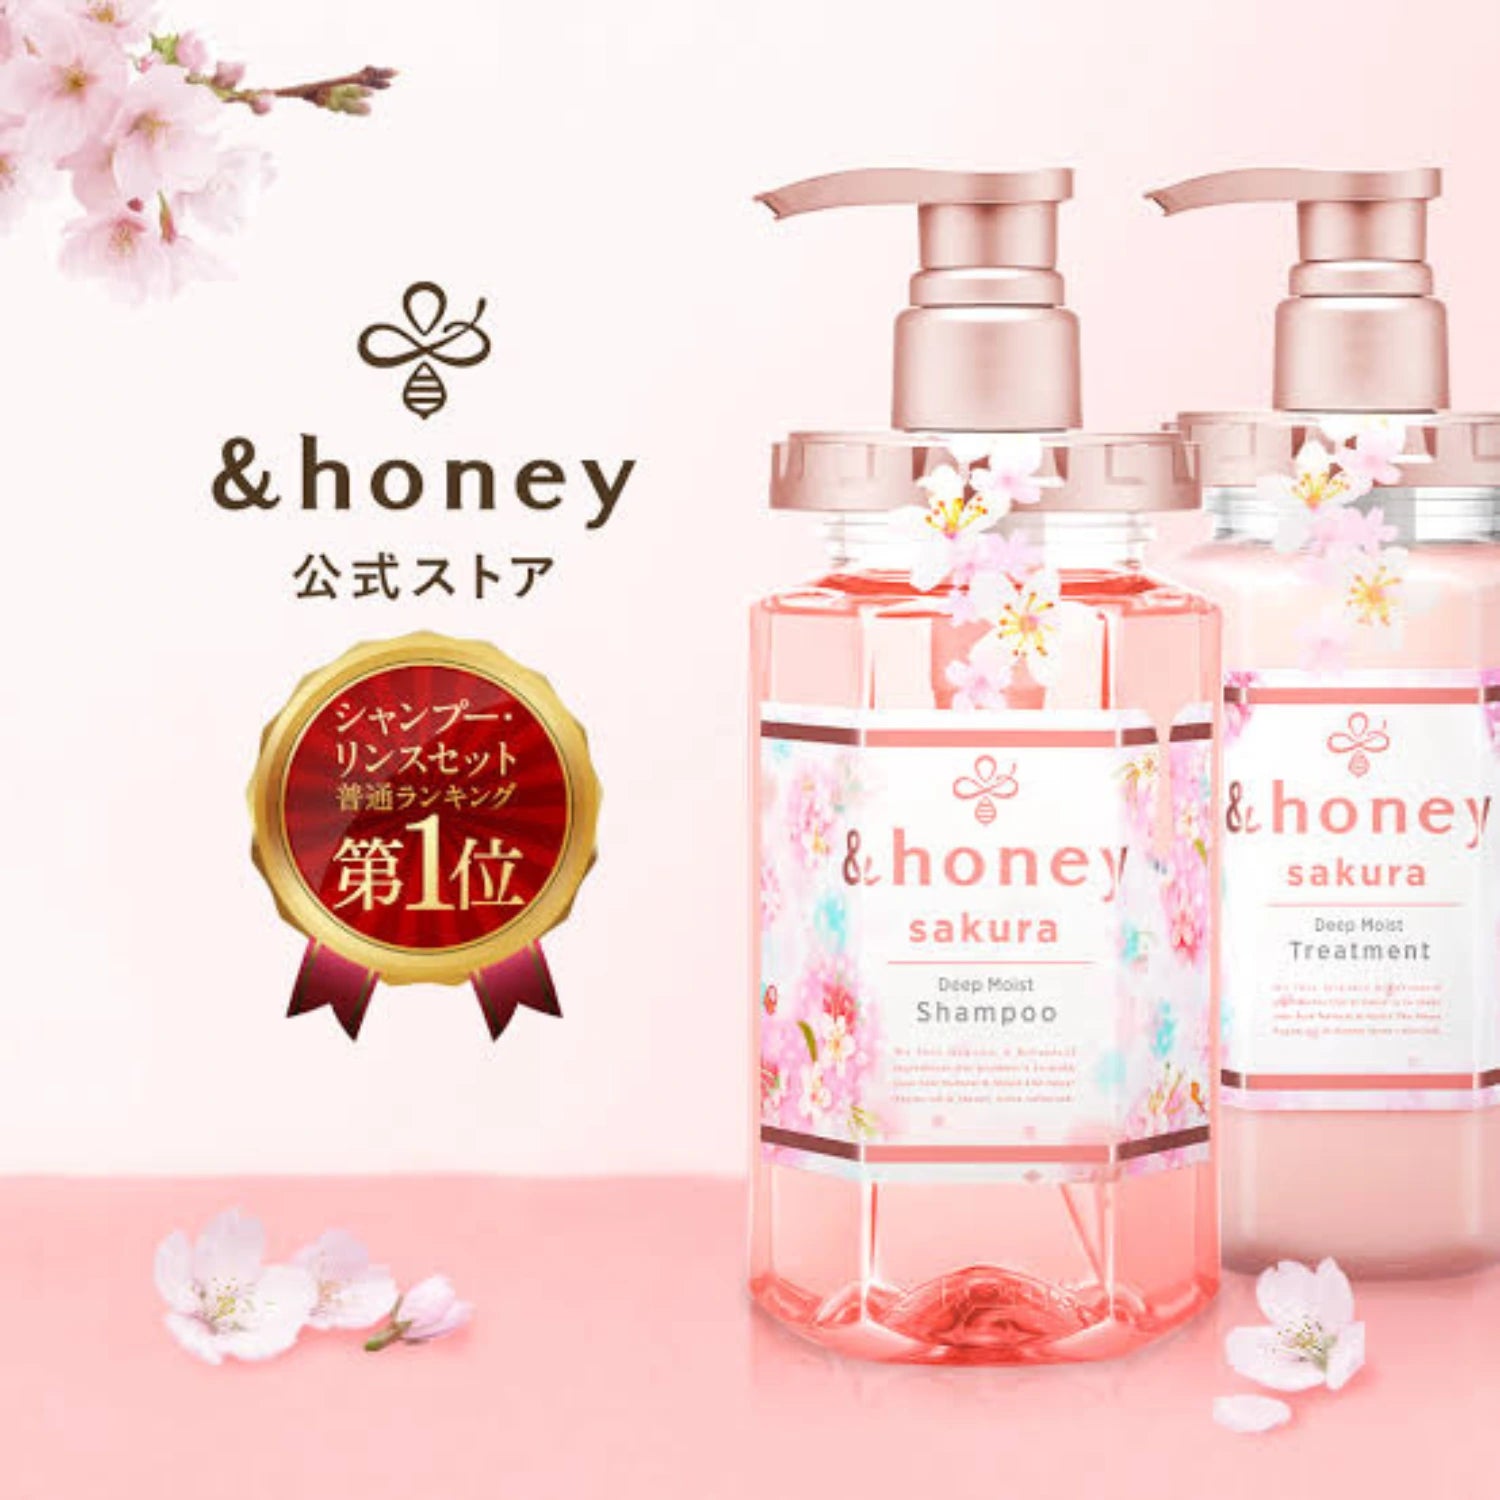 & Honey Sakura Limited Edition Shampoo, Treatment & Hair Oil Set 440ml Each + 100ml - Buy Me Japan